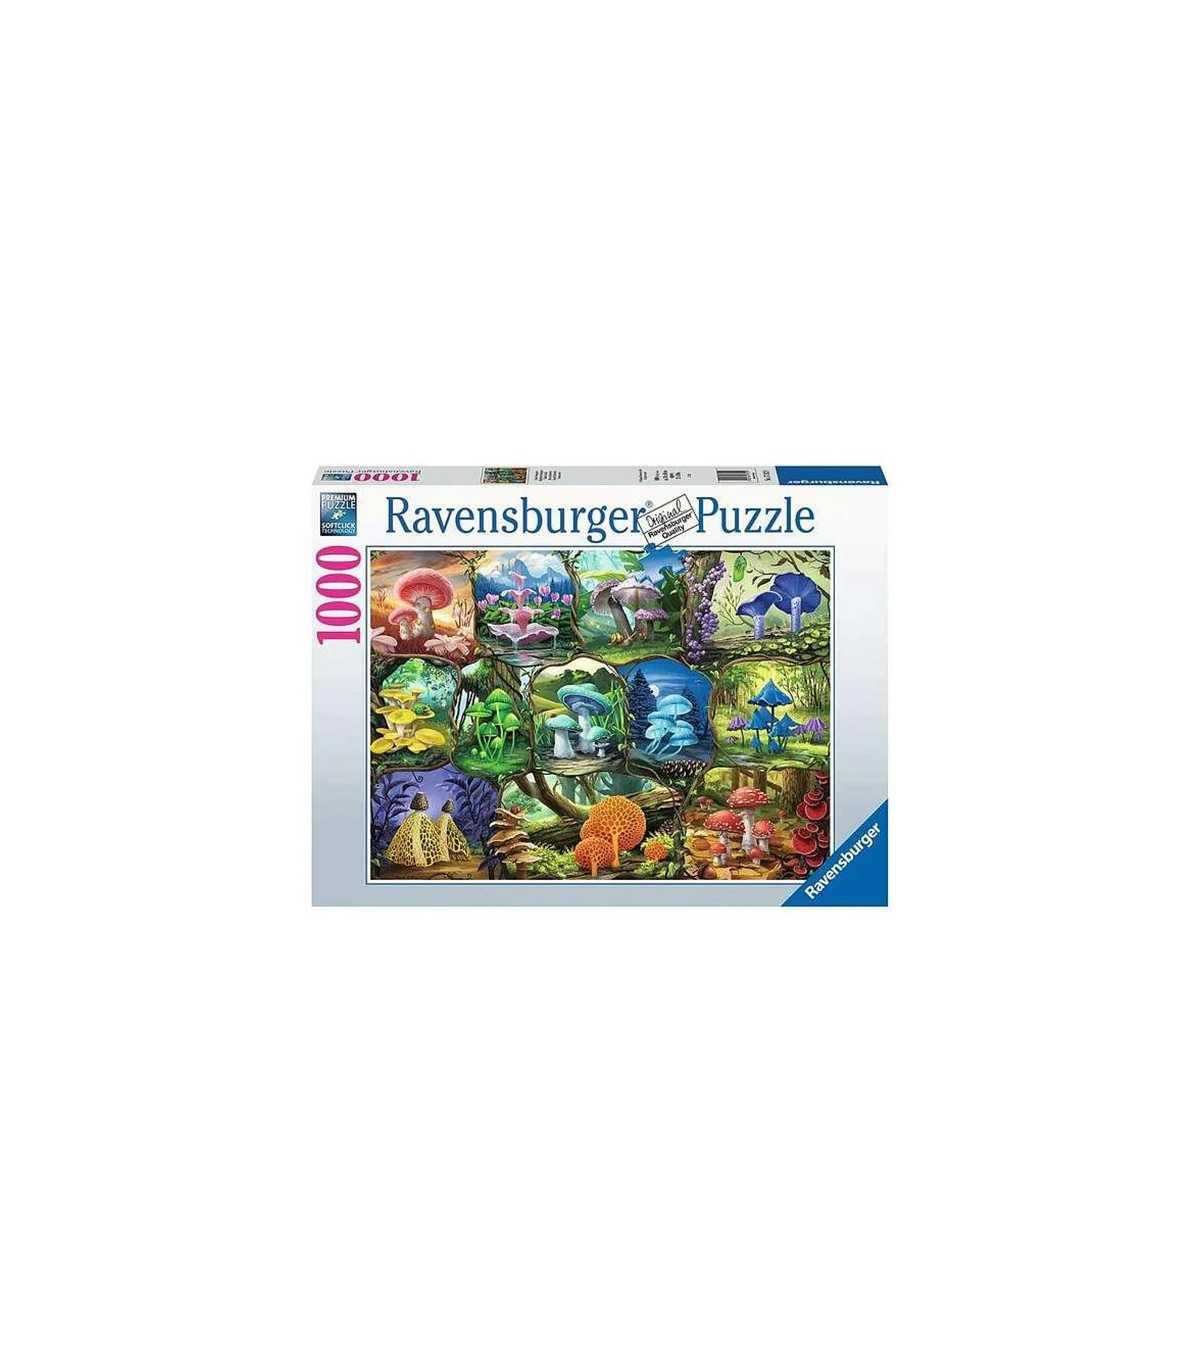 Ravensburger - Puzzle Fughi incantevoli, 1000 Pezzi, Puzzle Adulti